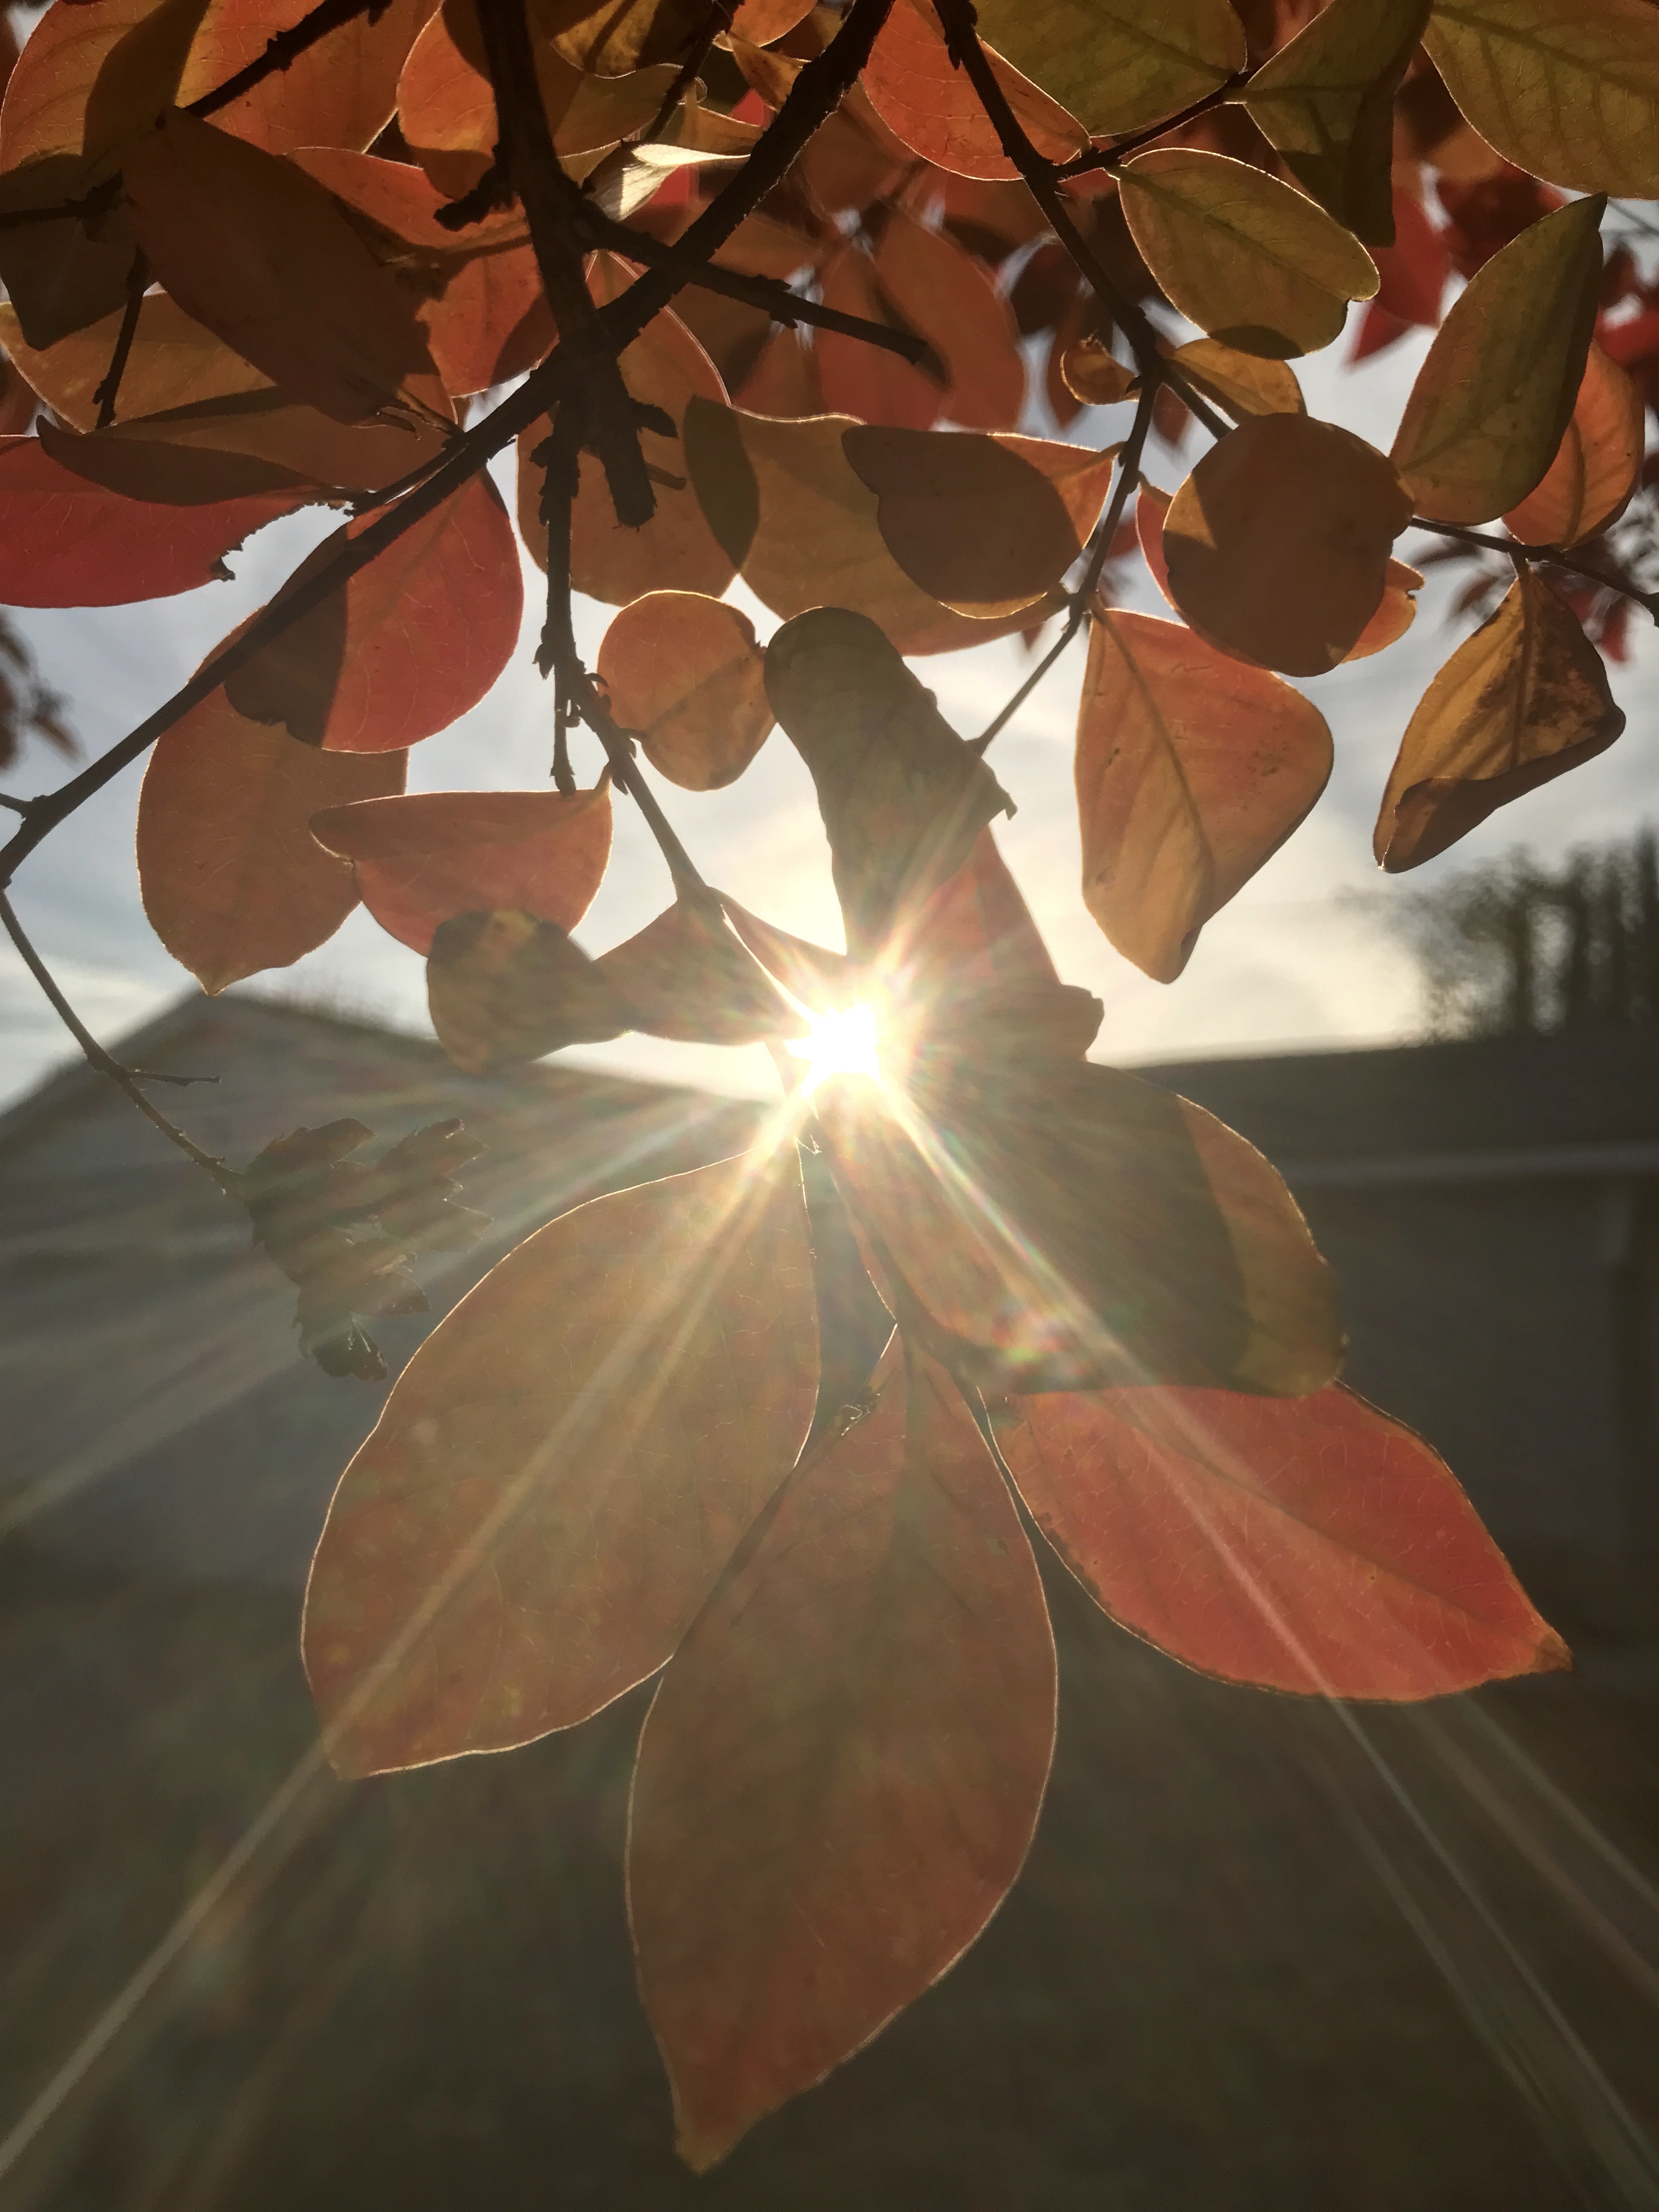 Sunset through autumn leaves in Ojai